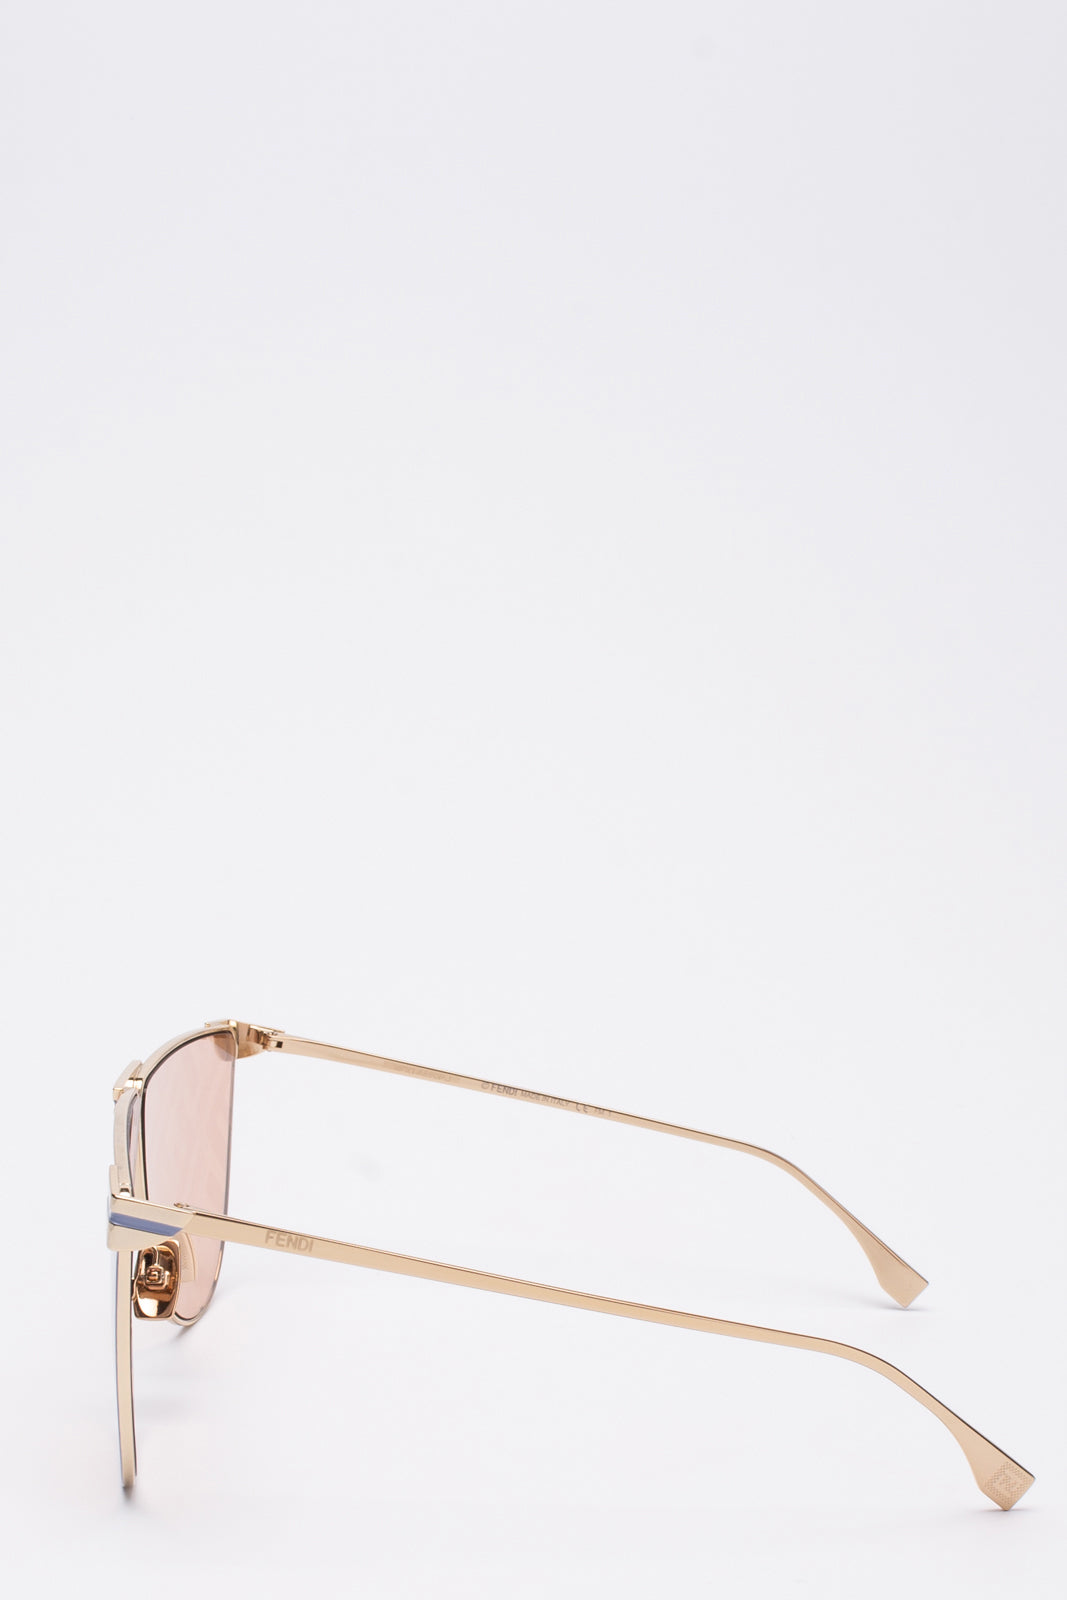 Fendi sunglasses with FF logo